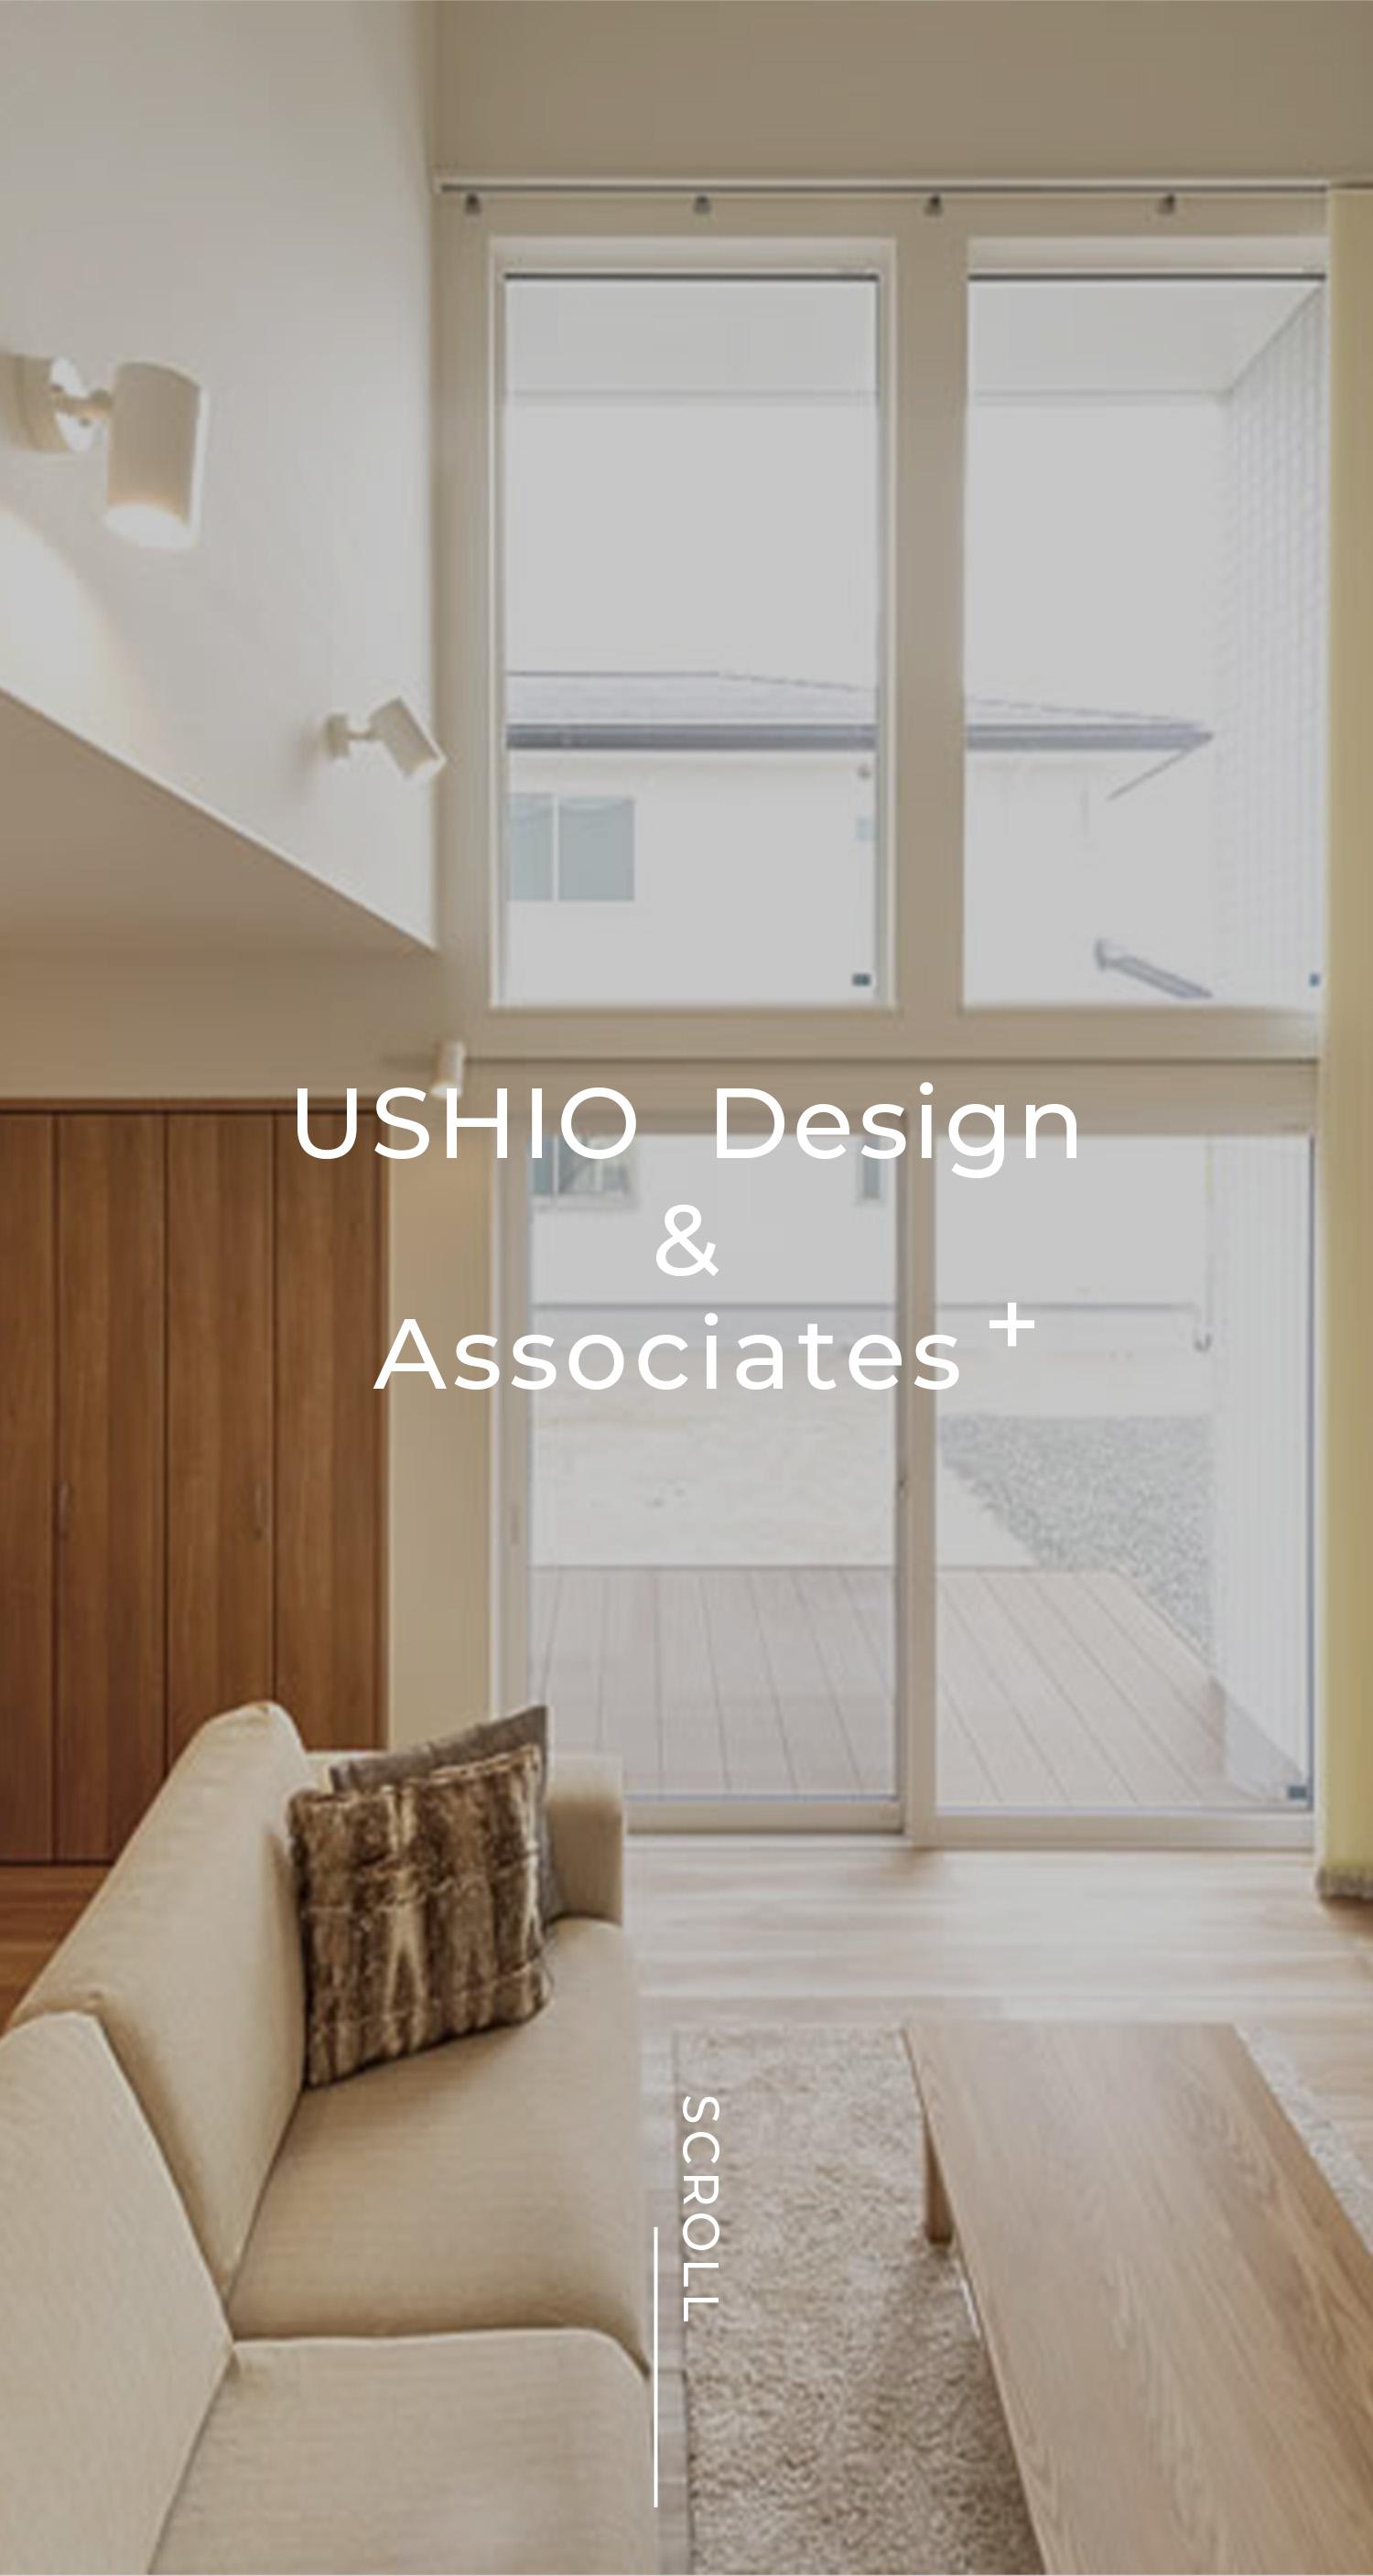 USHIO Dsign & Associates+